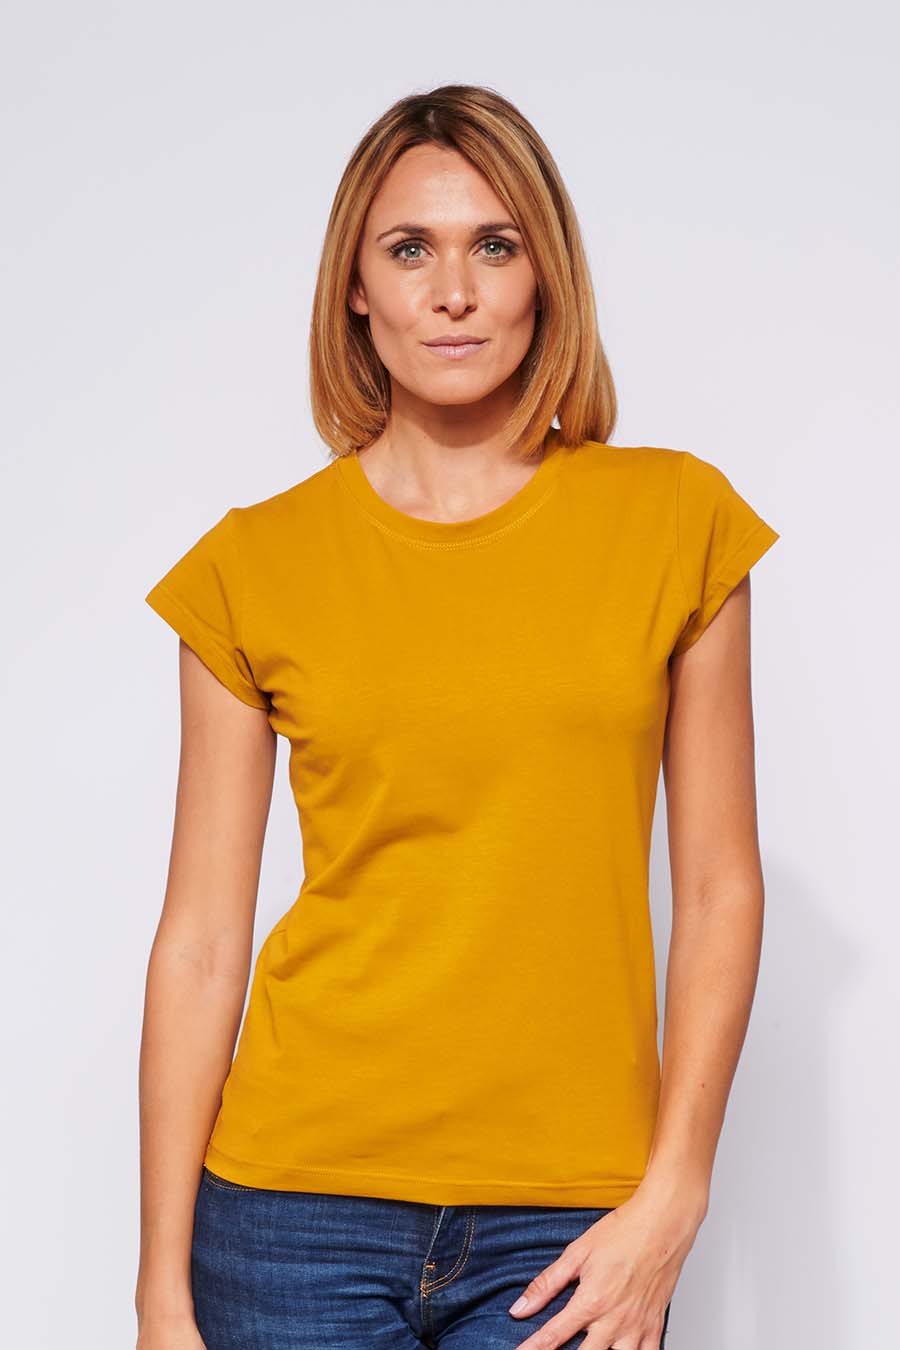 Tee-shirt Femme made in France en coton bio LAURE moutarde - FIL ROUGE